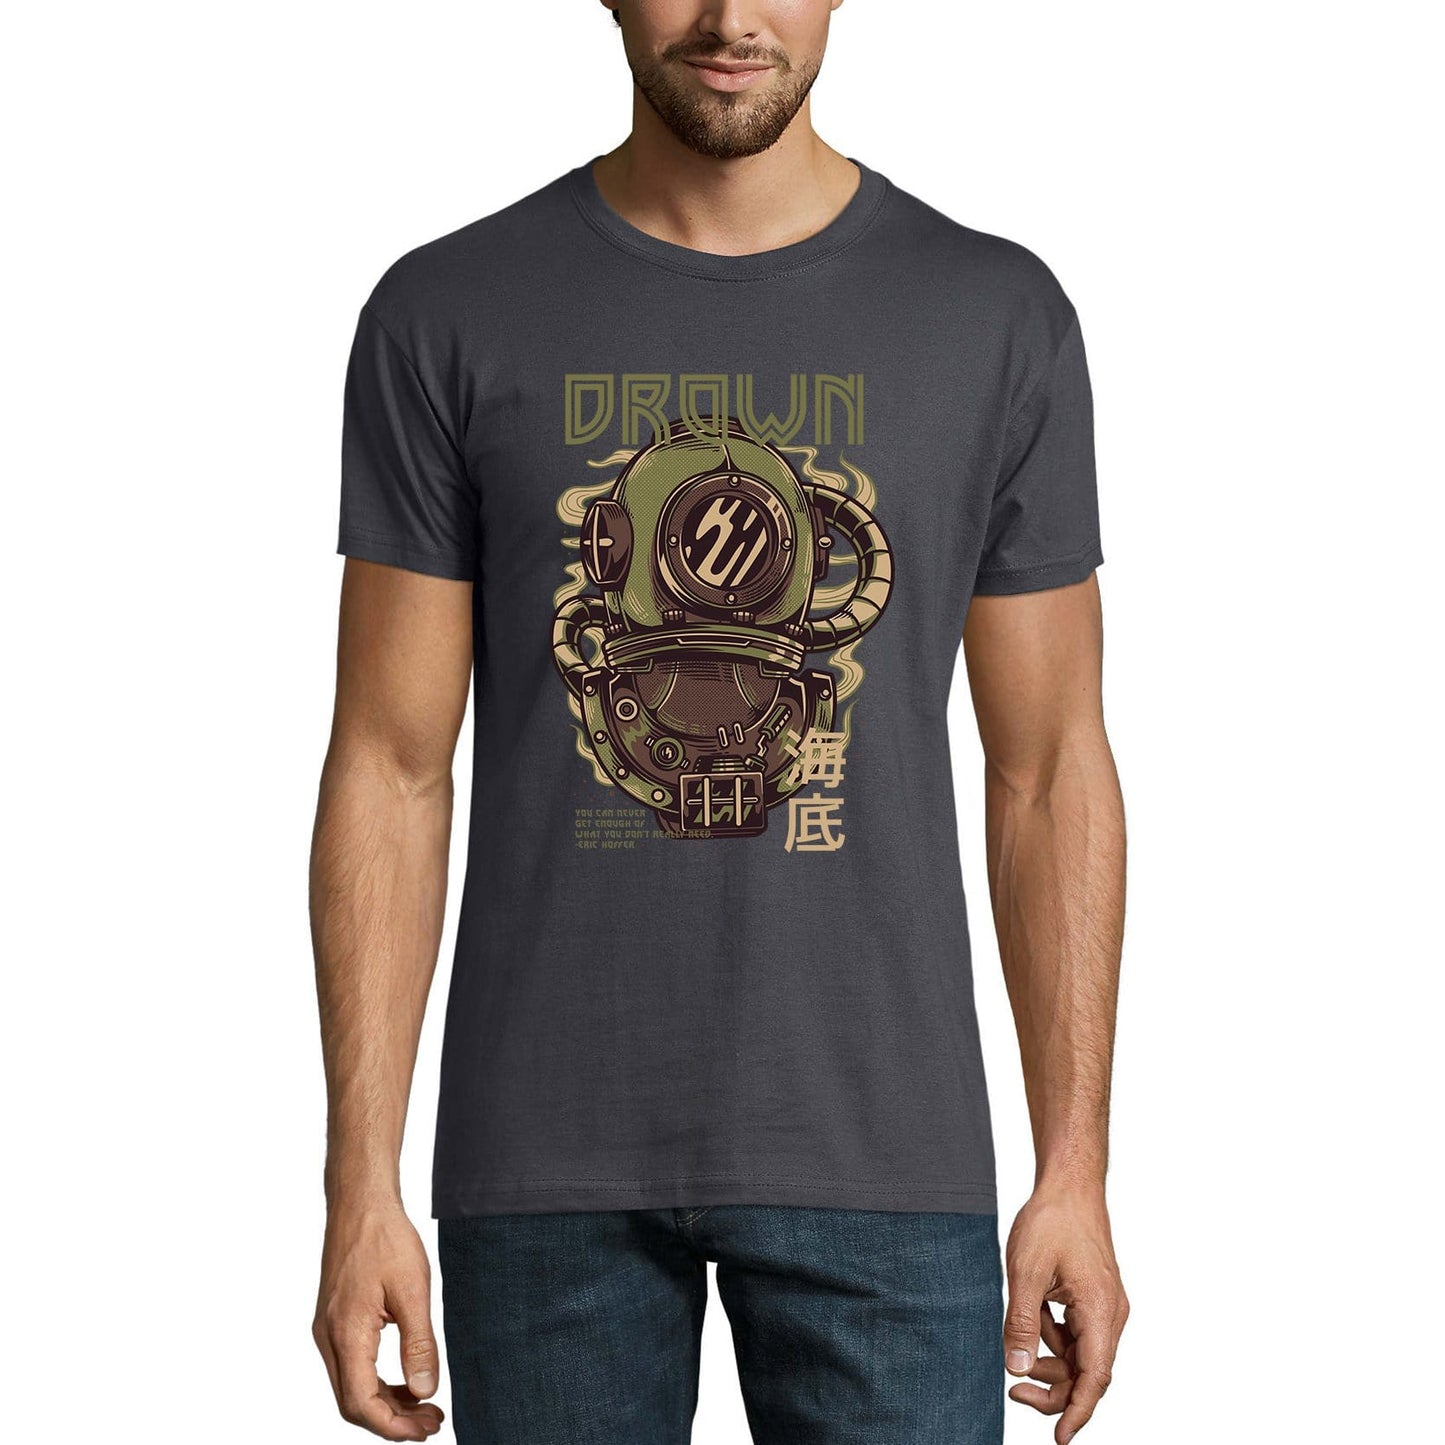 ULTRABASIC Men's Novelty T-Shirt Drown - Funny Tee Shirt